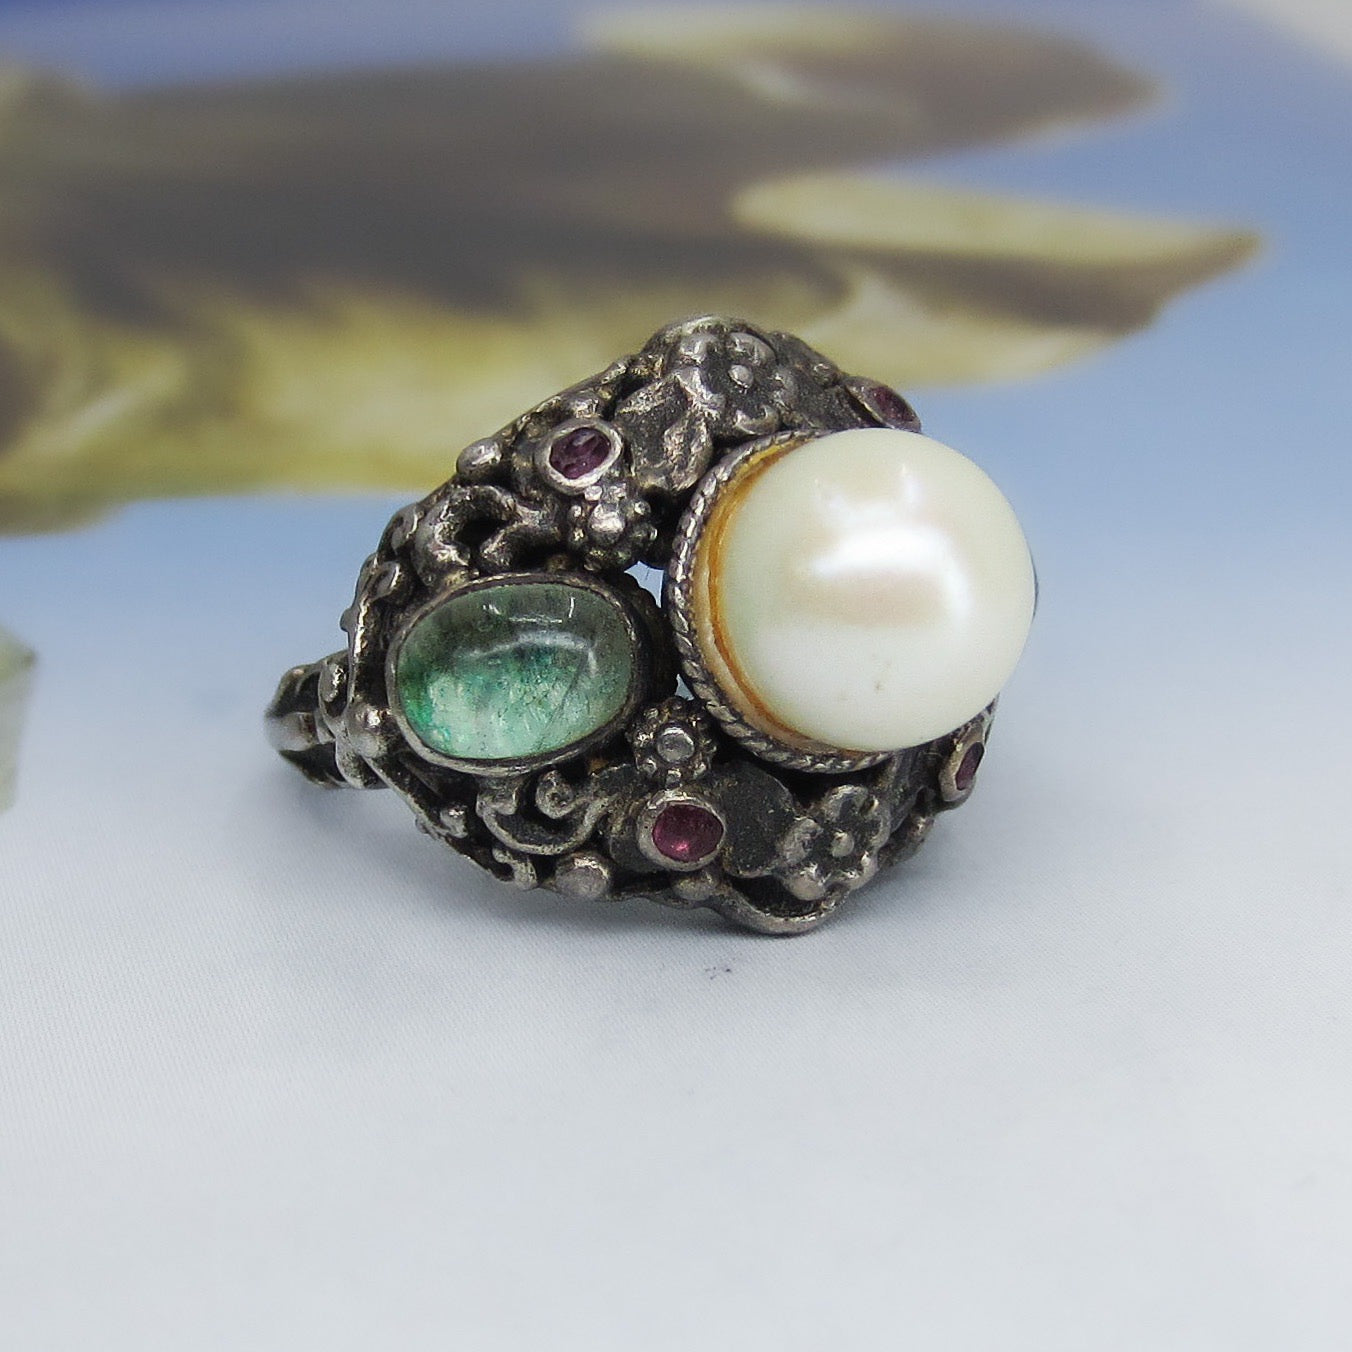 Vintage Renaissance Revival Pearl, Beryl and Garnet Ring Sterling, c. 1930